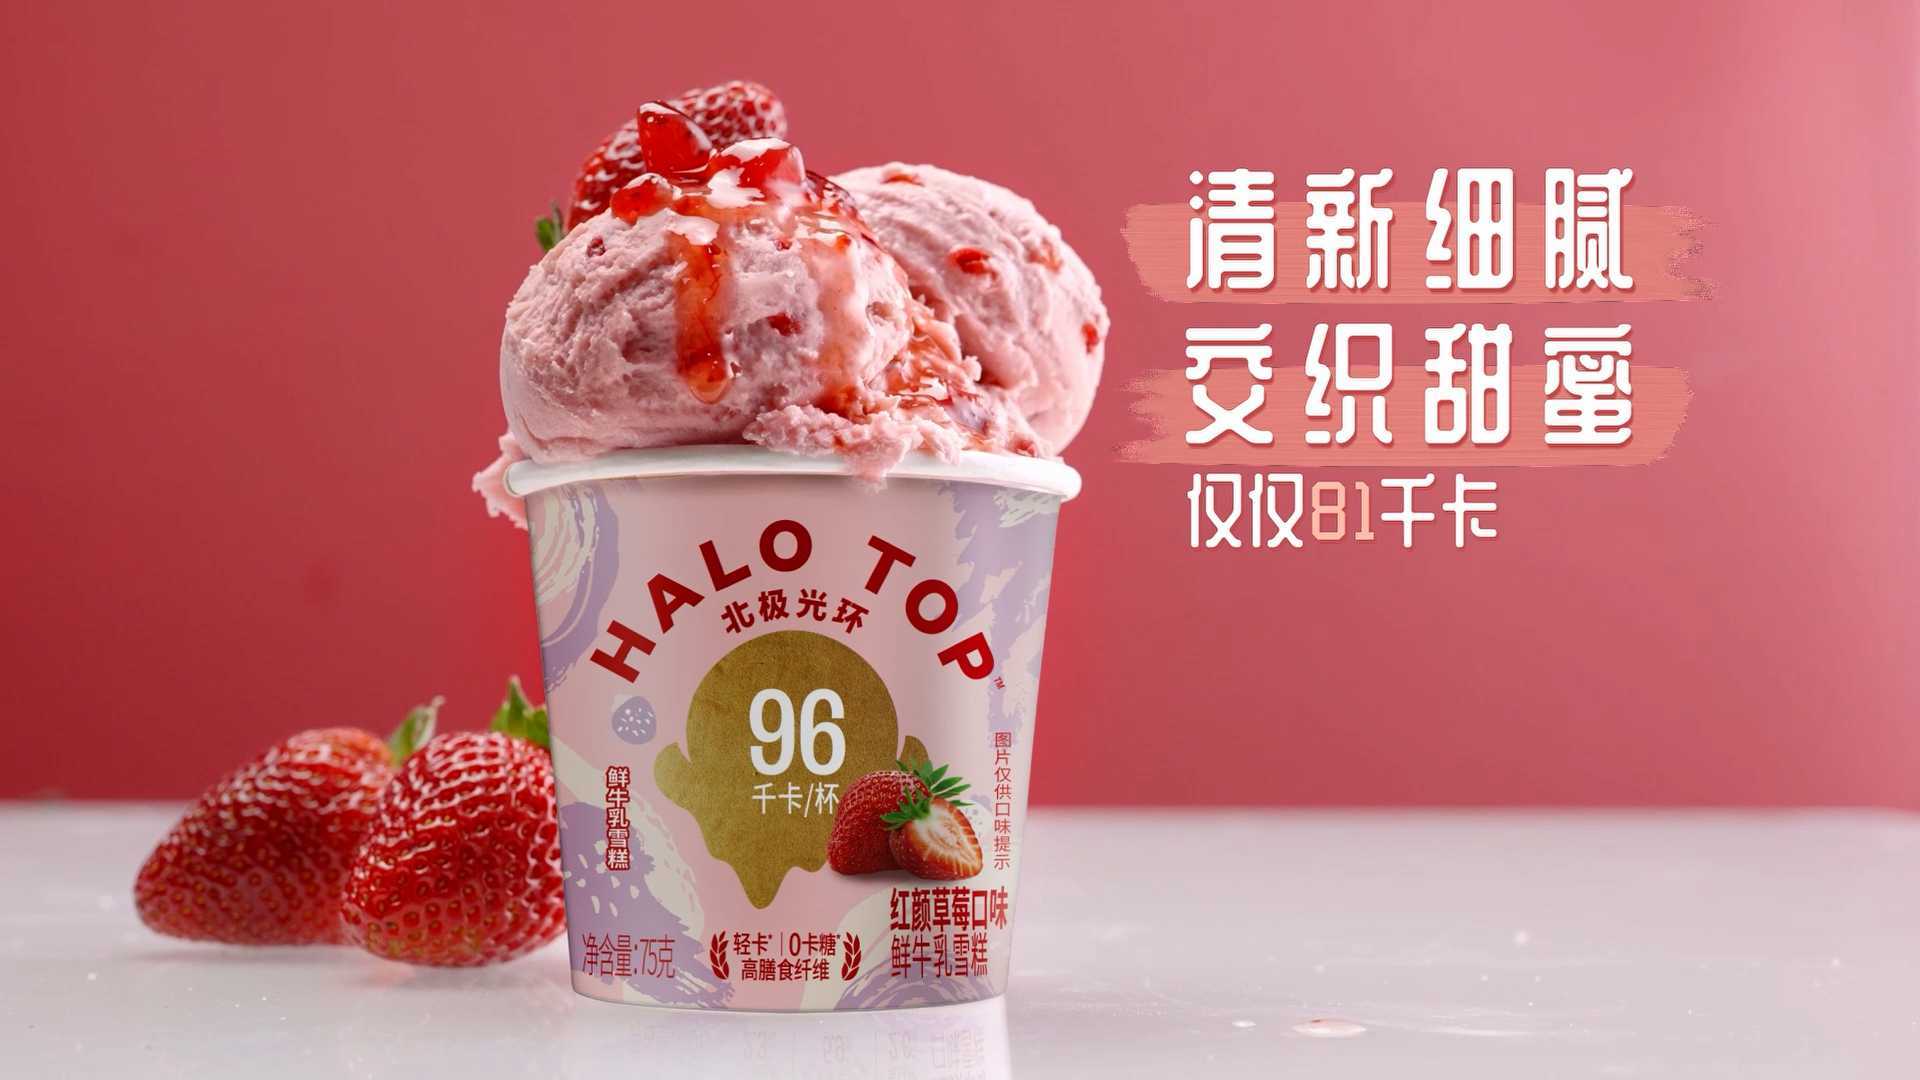 HaloTop北极光环红颜草莓口味轻卡低脂冰淇淋雪糕